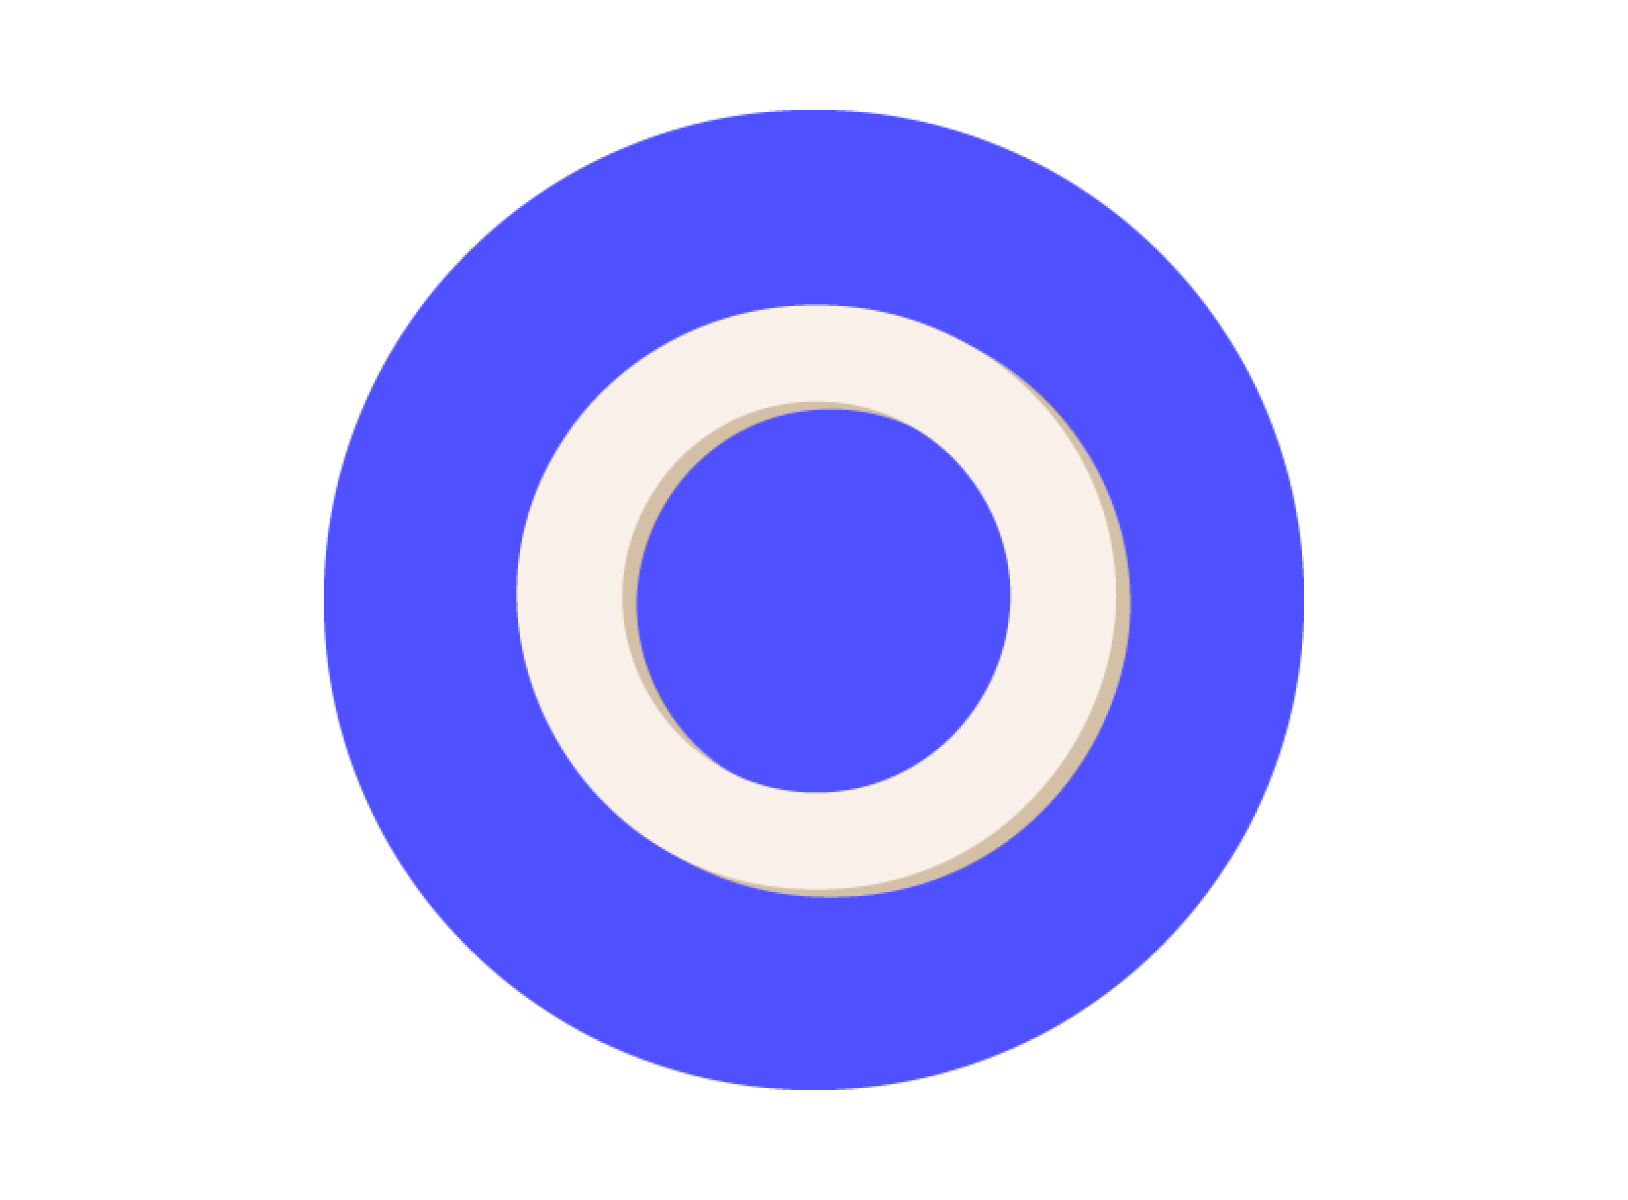 Oscar logo on blue background